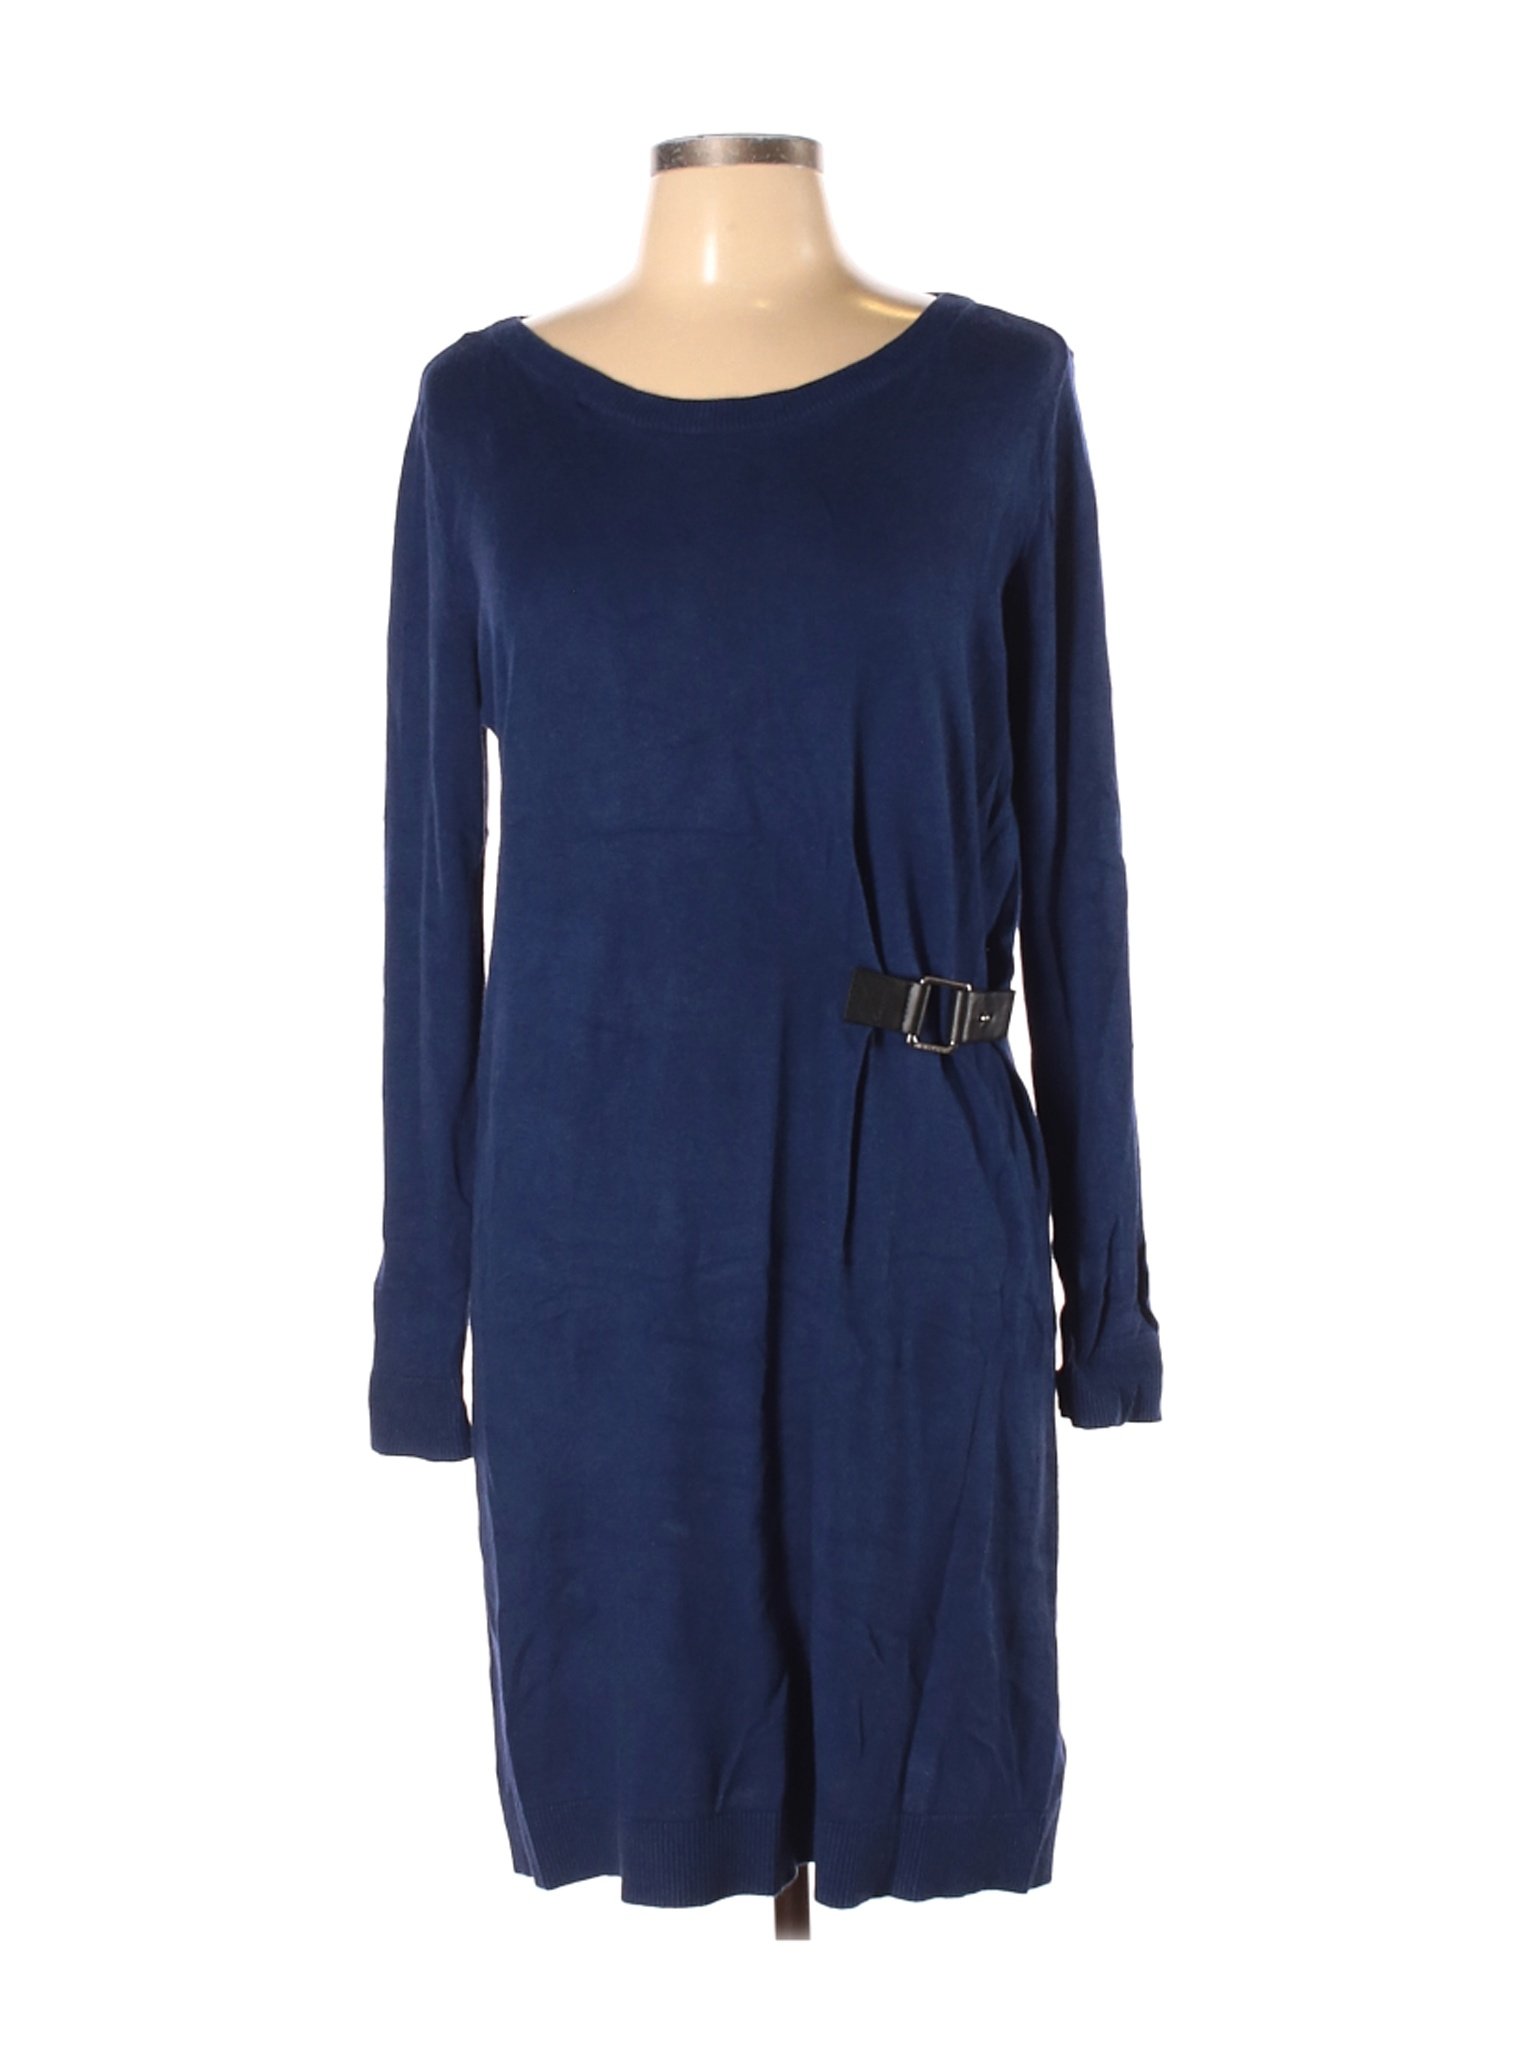 MICHAEL Michael Kors Women Blue Casual Dress L | eBay